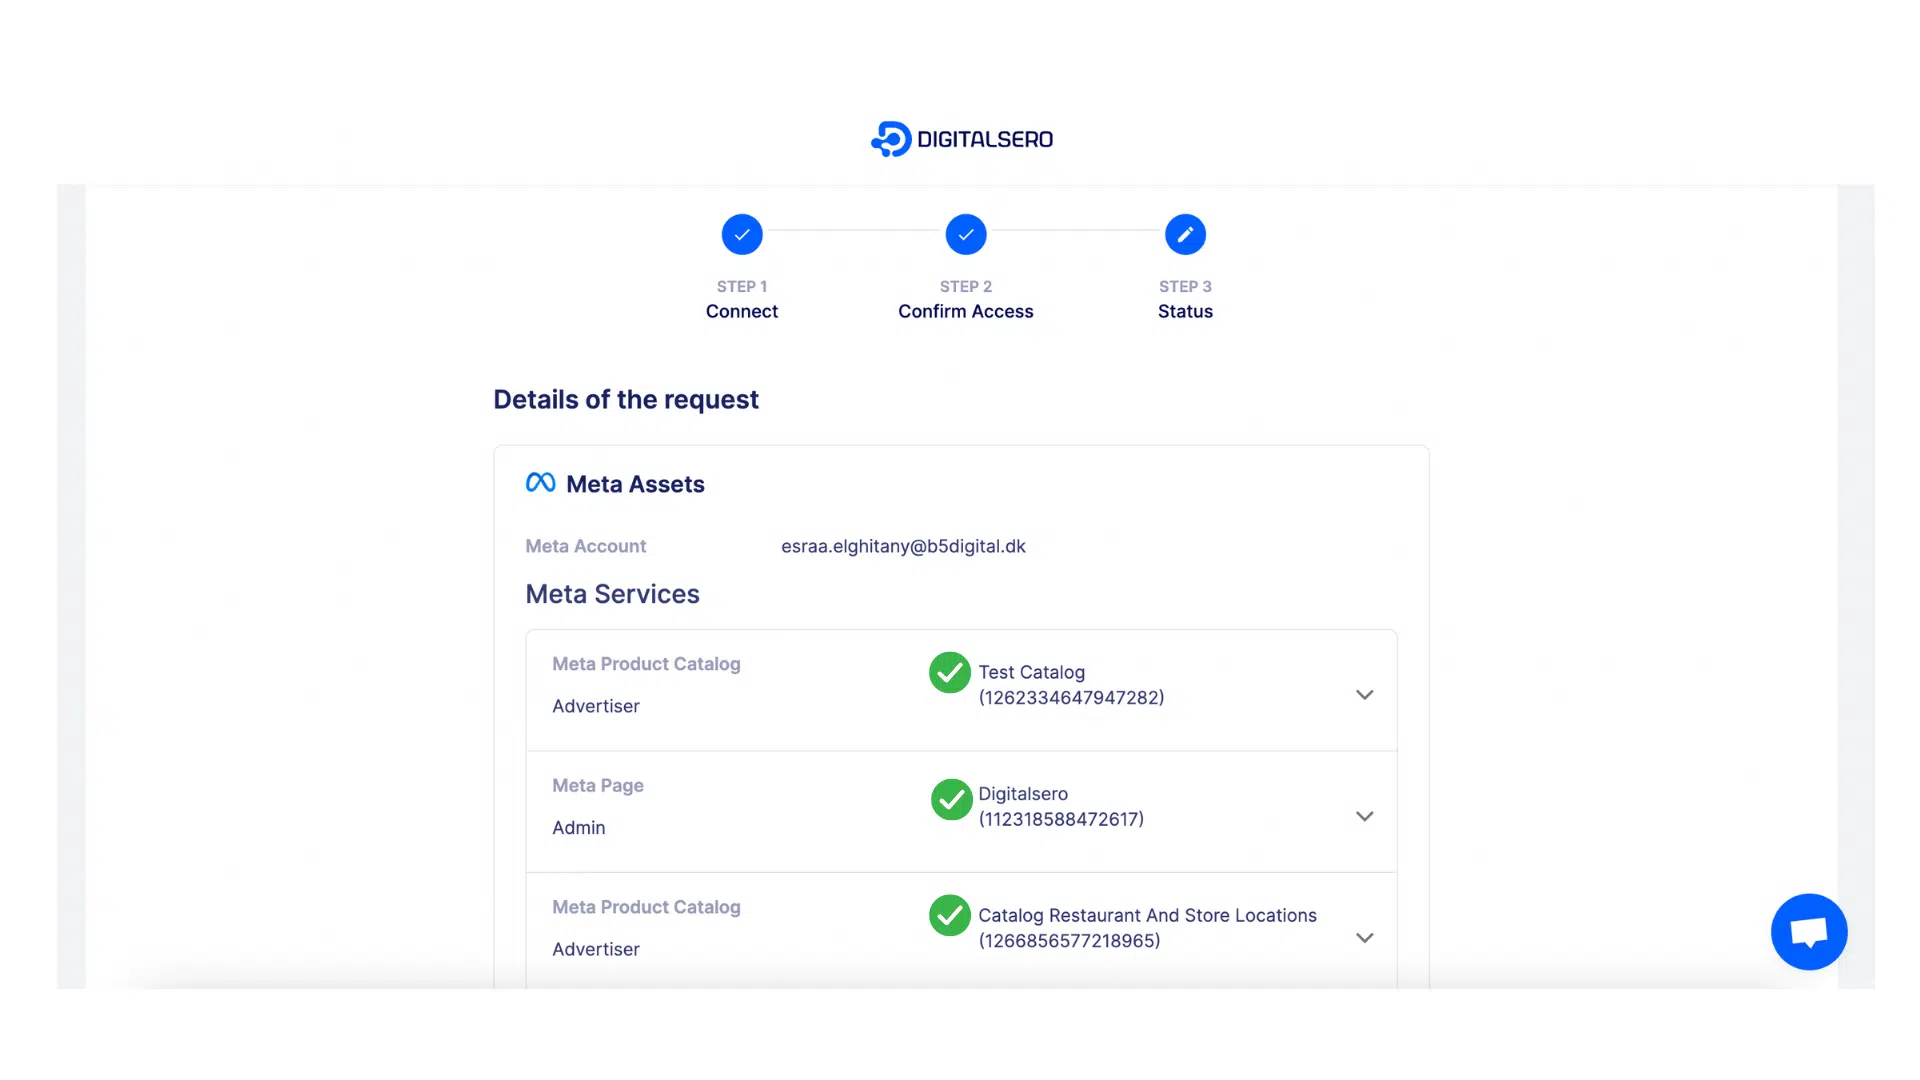 Screenshot of client granting access request to Meta Business Manager through Digitalsero